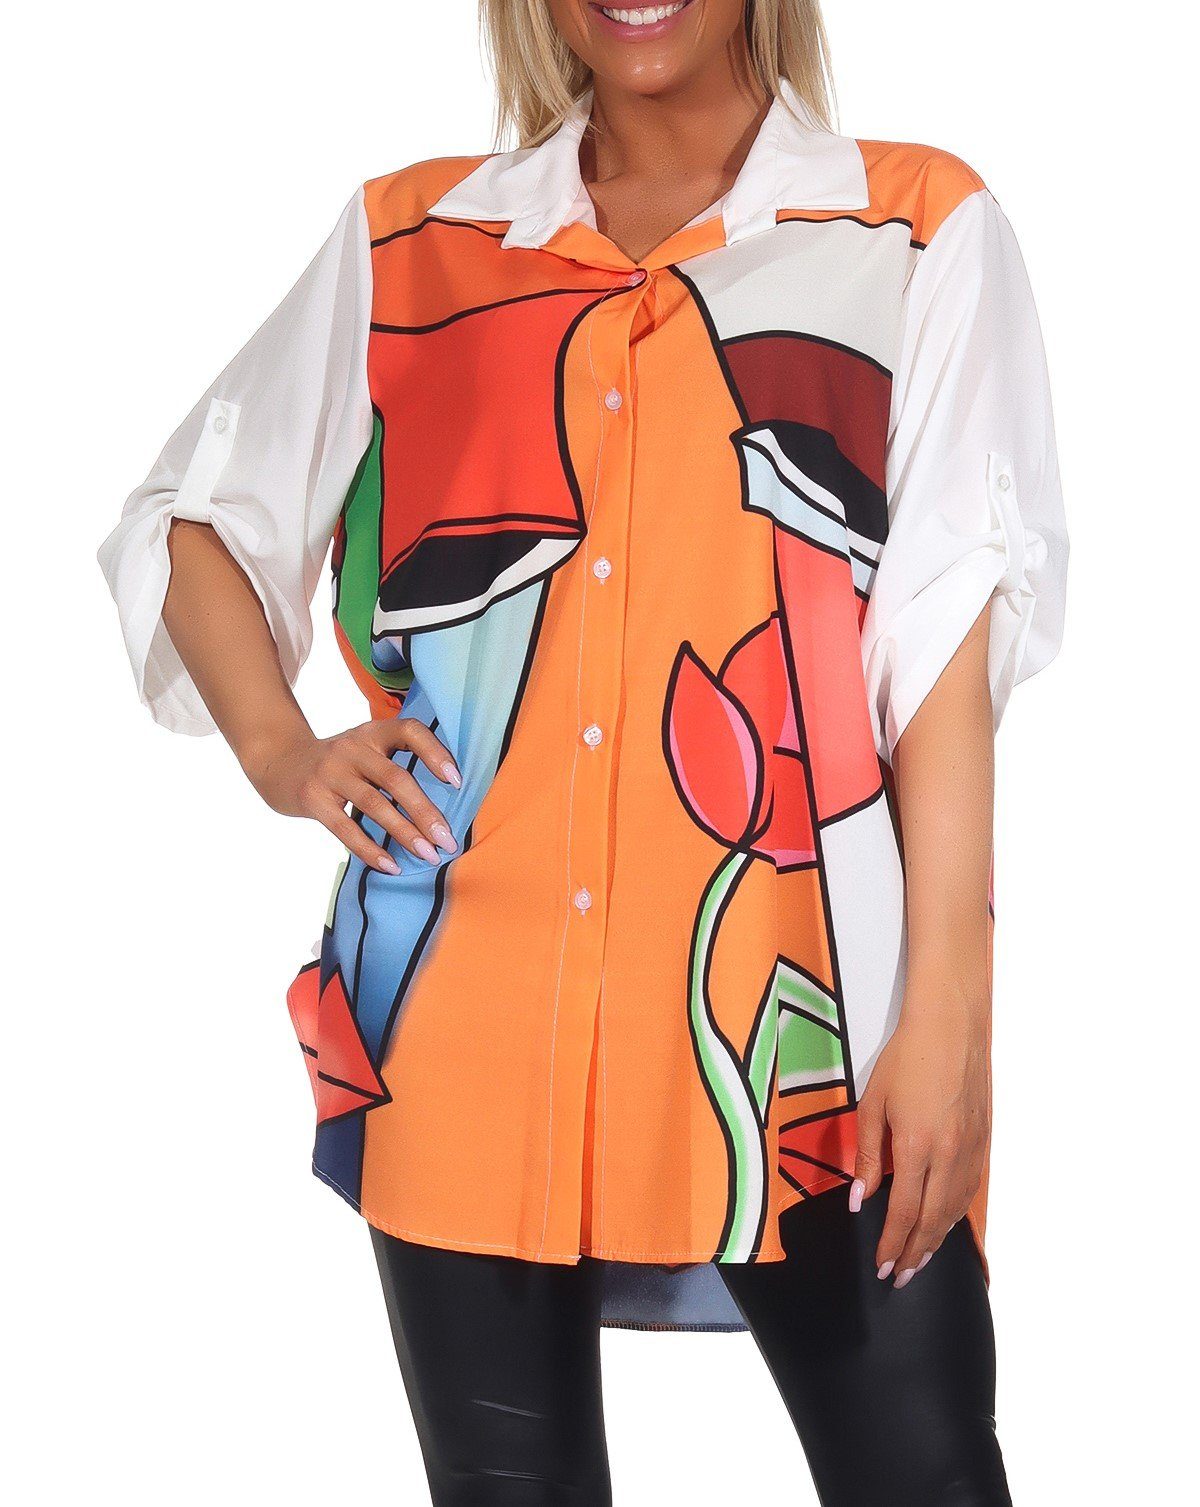 Mississhop Hemdbluse Damen Hemdbluse mit modernem Print Bluse Freizeit M. 376 Model 1